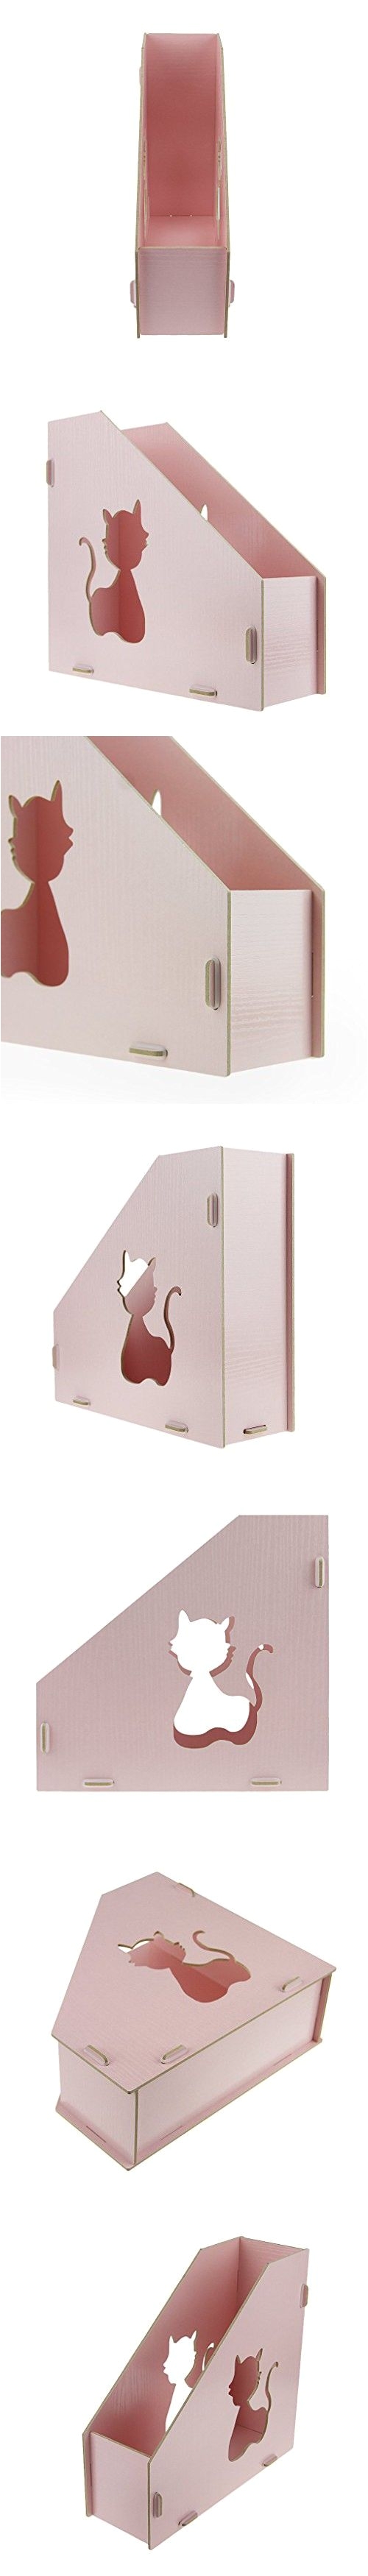 clobeau diy wooden hollow cats creative desktop file storage box document books magazine holder sorter office